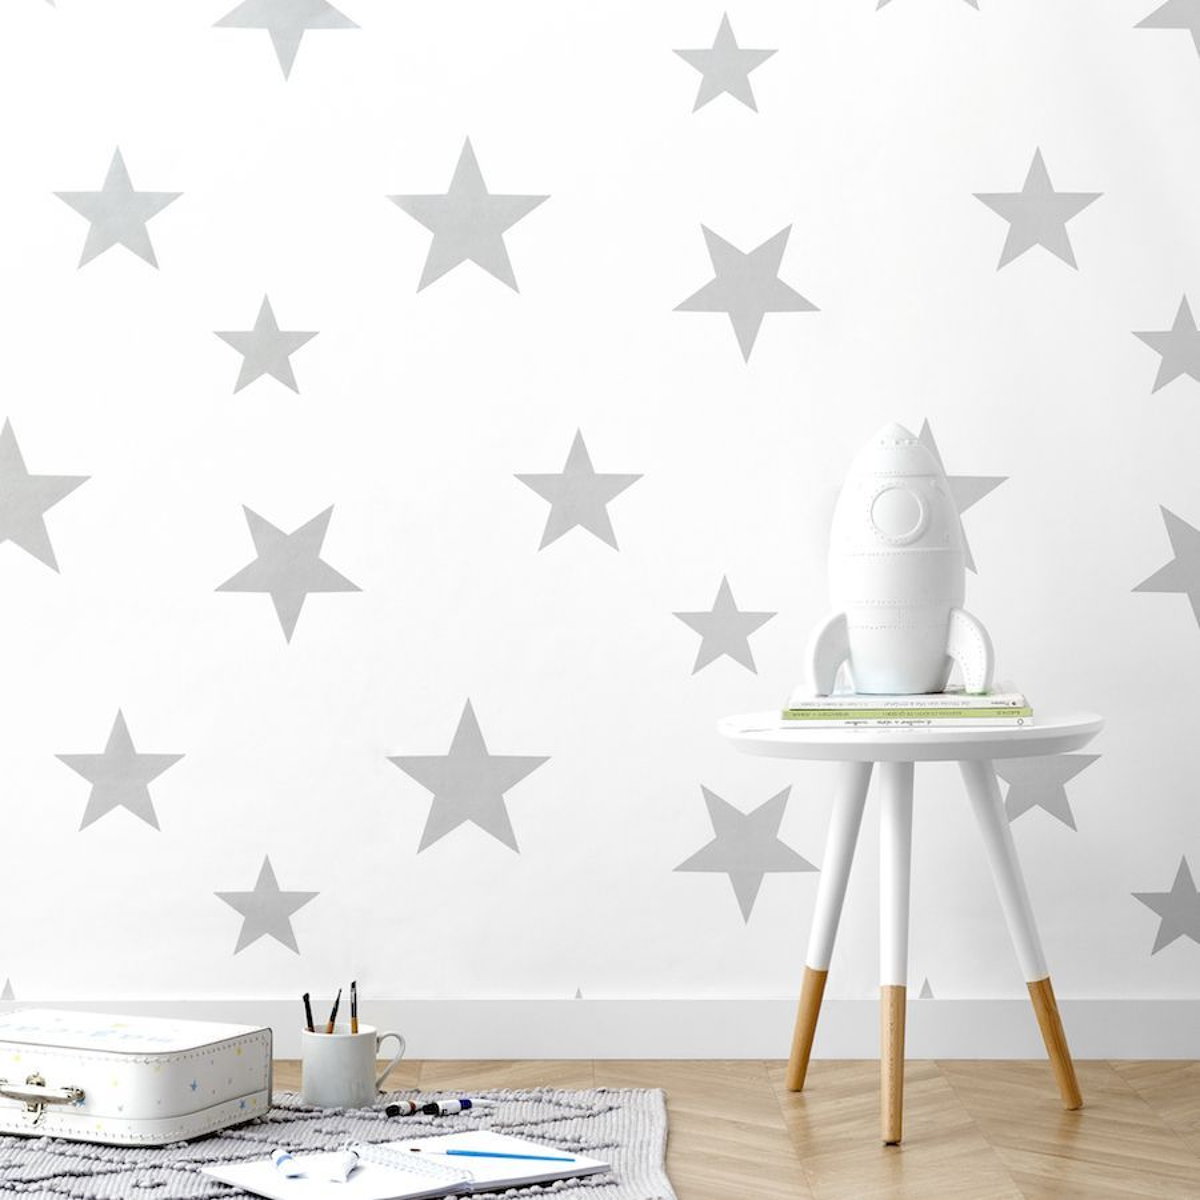 Stars wallpaper gris/blanco